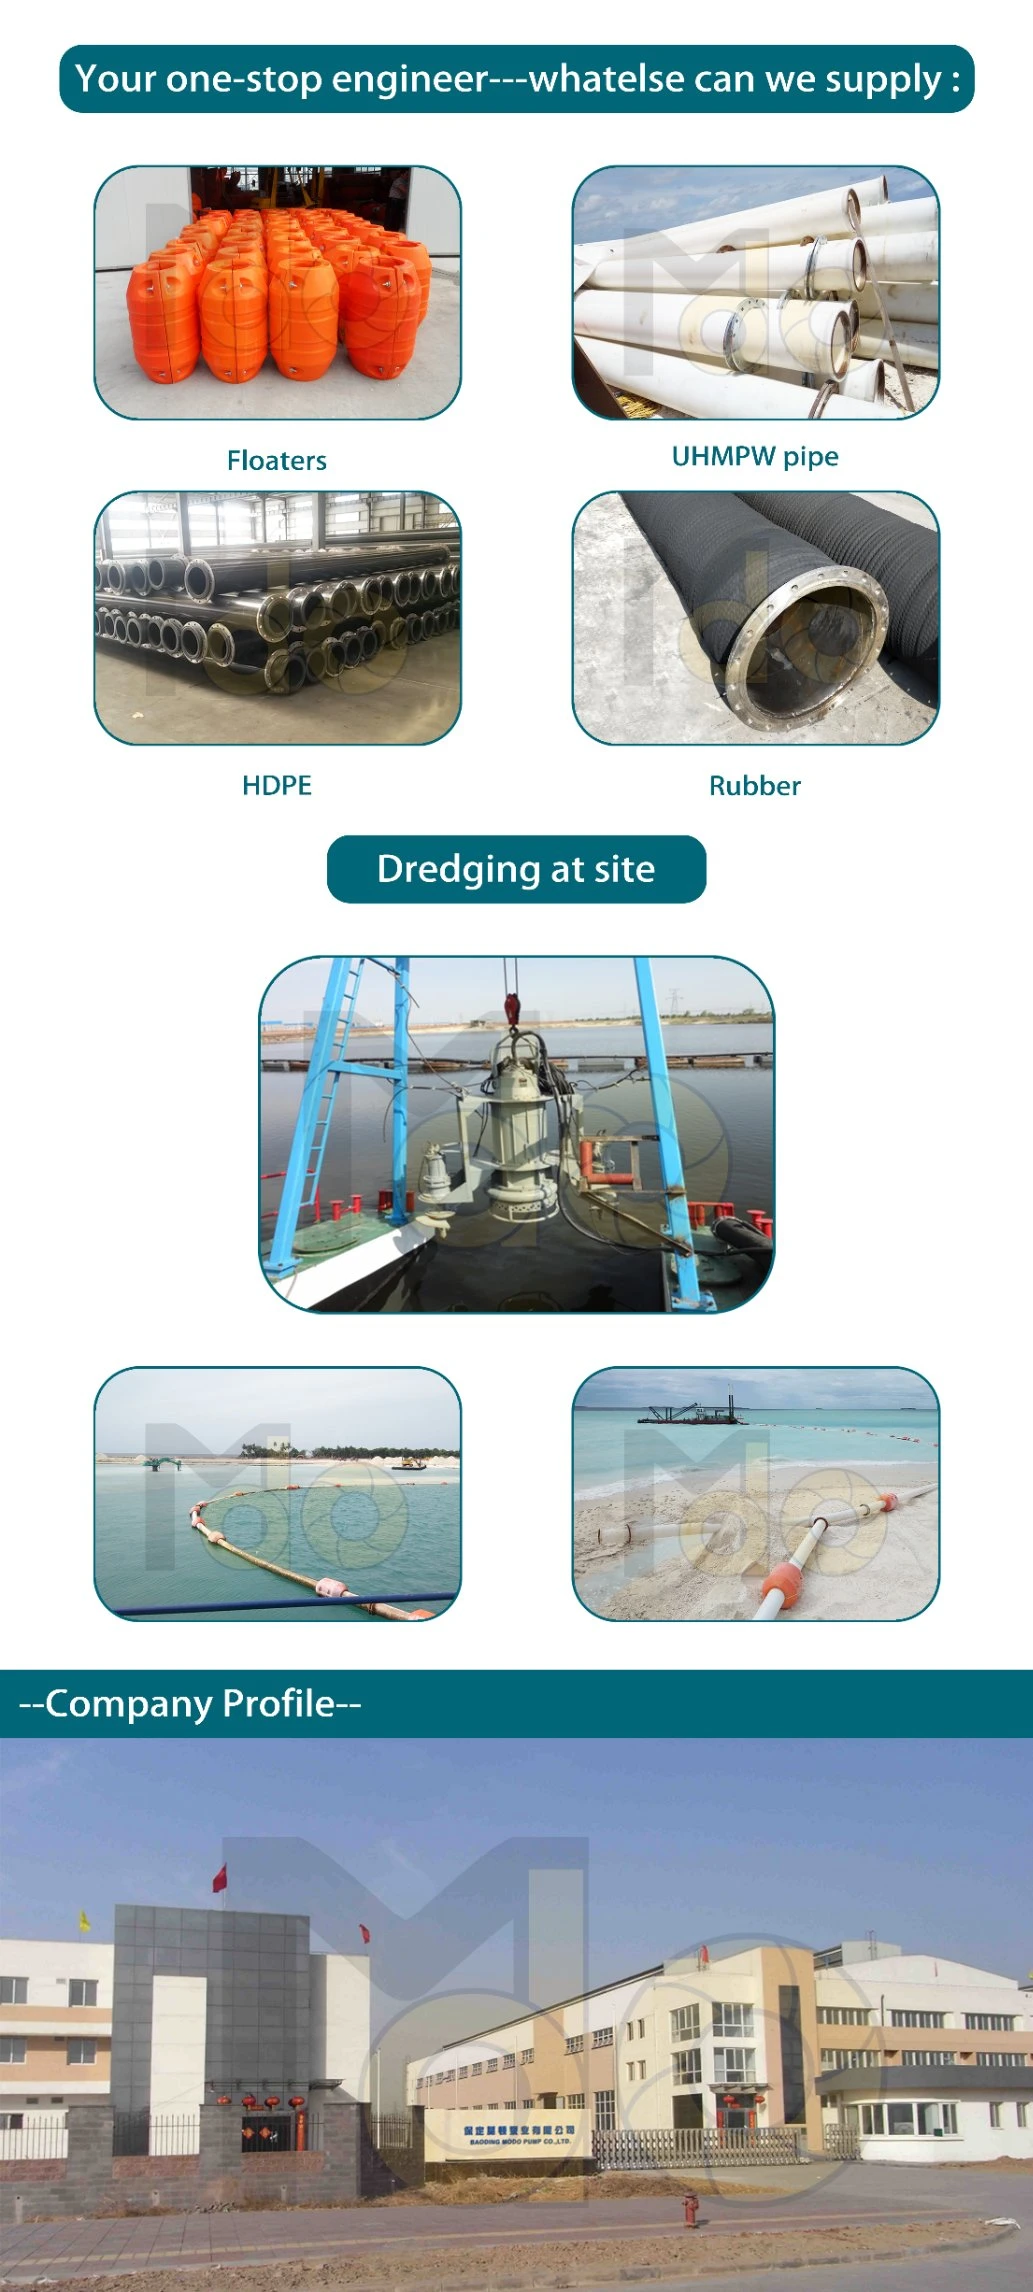 The Best Micro Sand Vertical Desulfurization Titanium Submersible Slurry Pump for Civil Construction